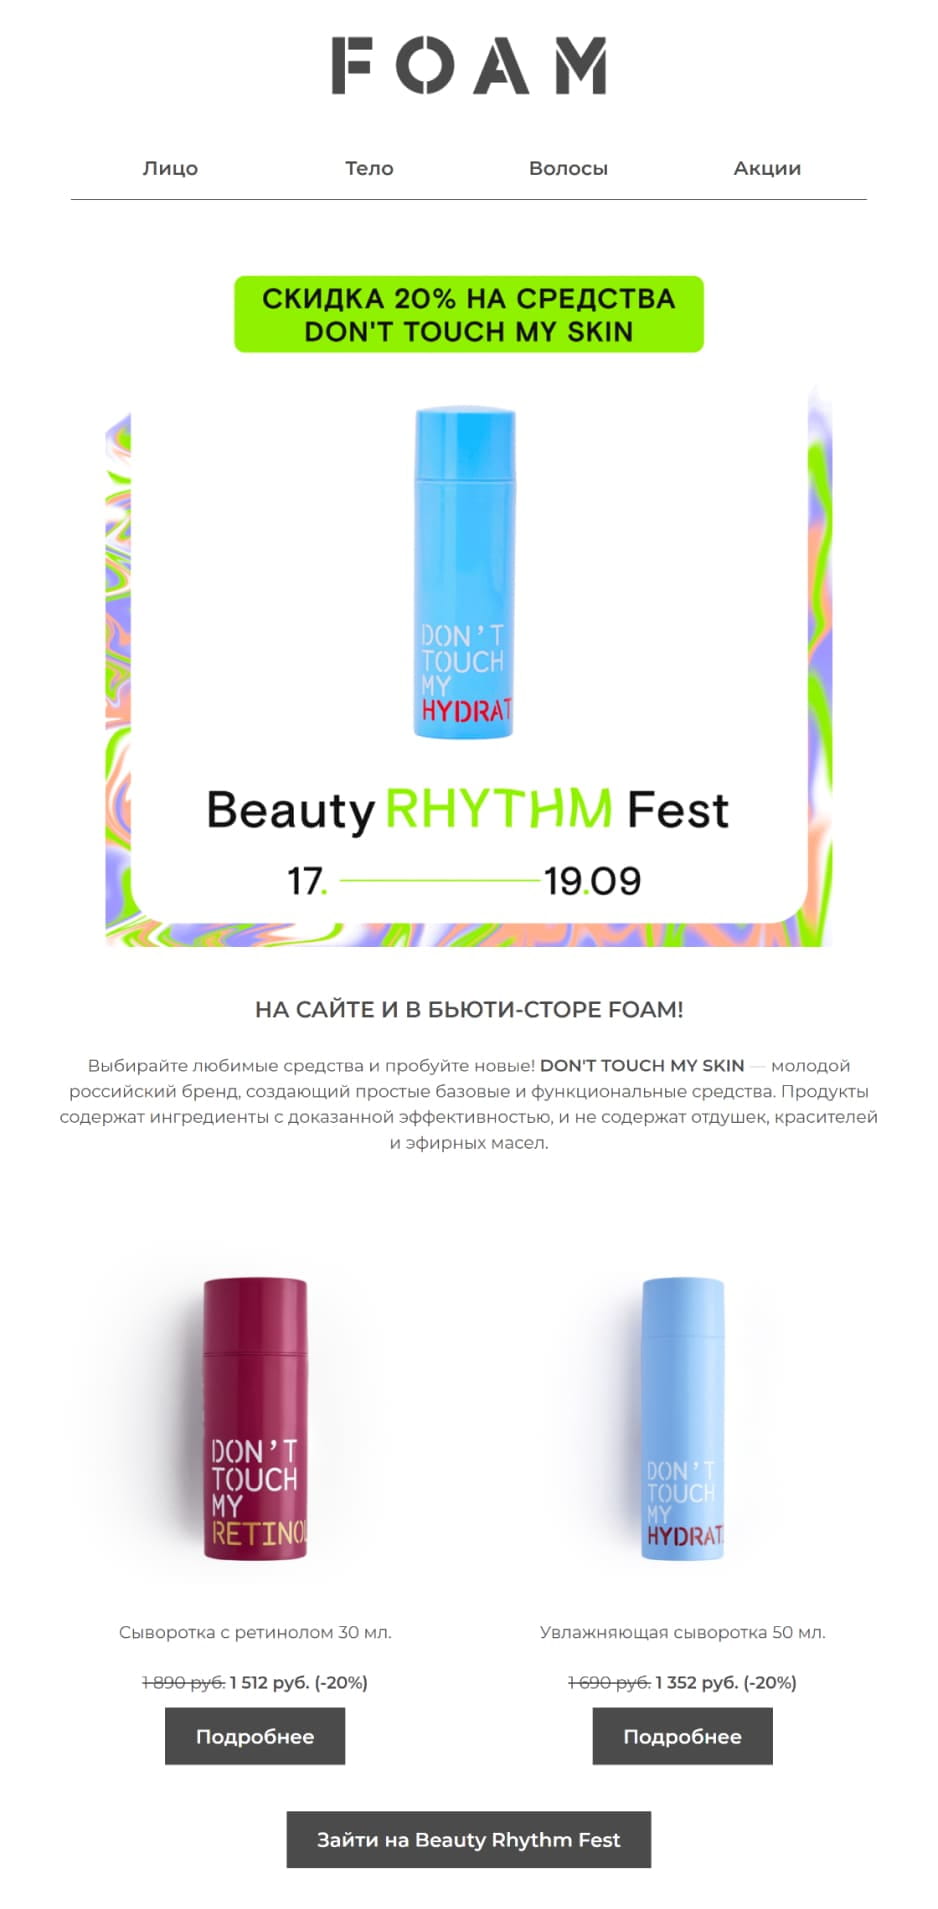 Email-рассылка об акции Beauty Rhythm Fest